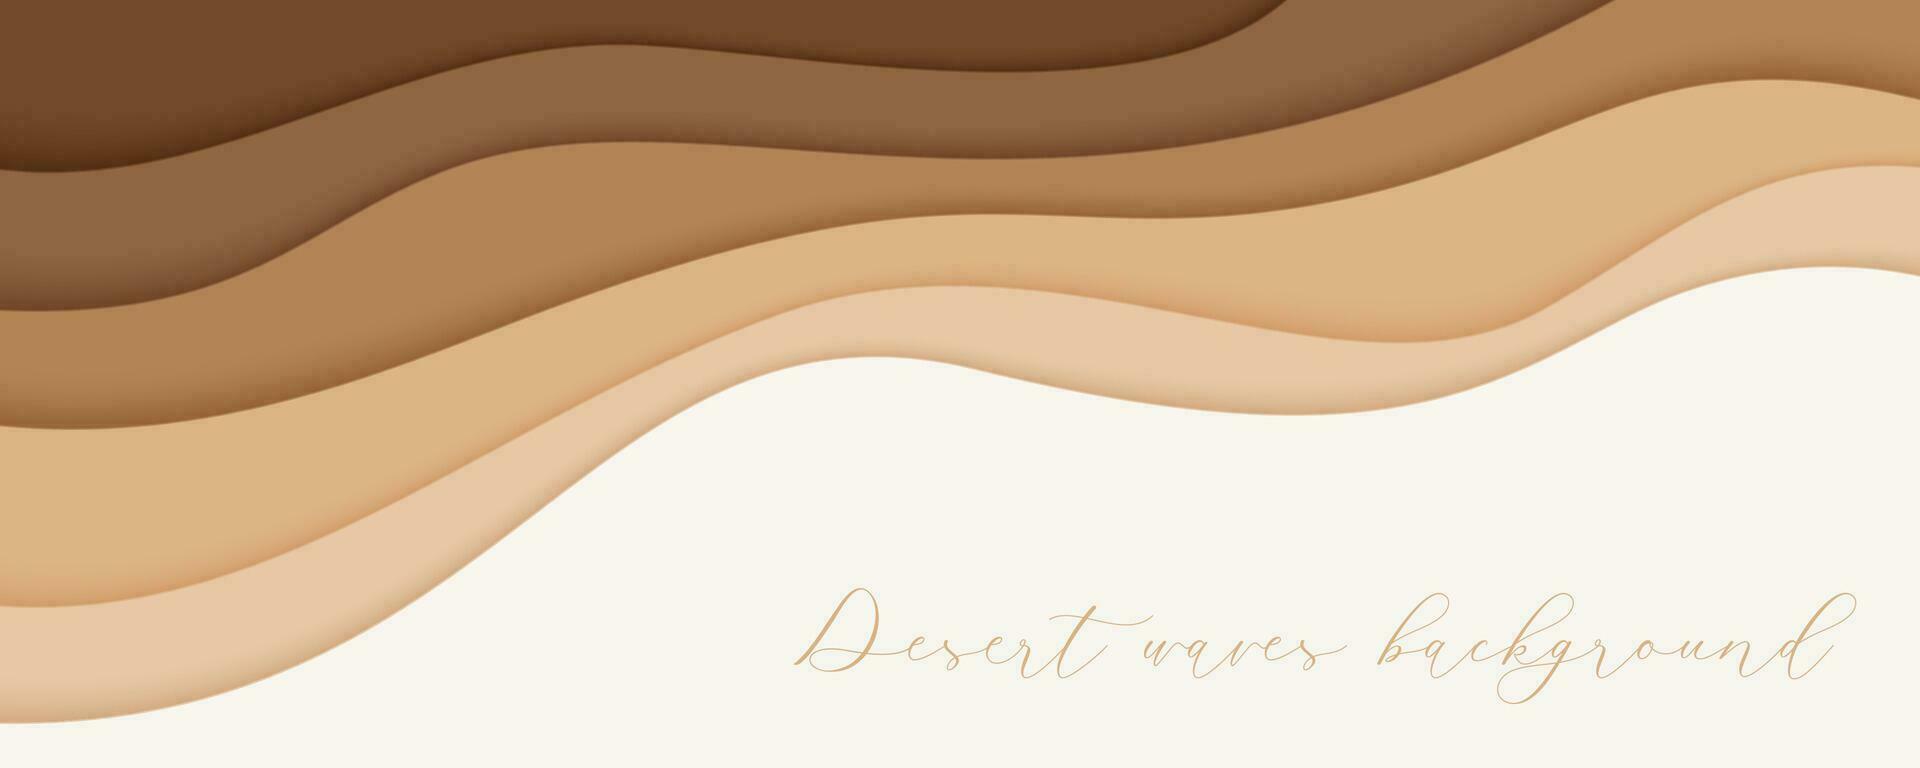 öken- vågor, sand sanddyner papper konst baner, affisch mall. naken beige vågor papperssår stil. vektor illustration eps 10.